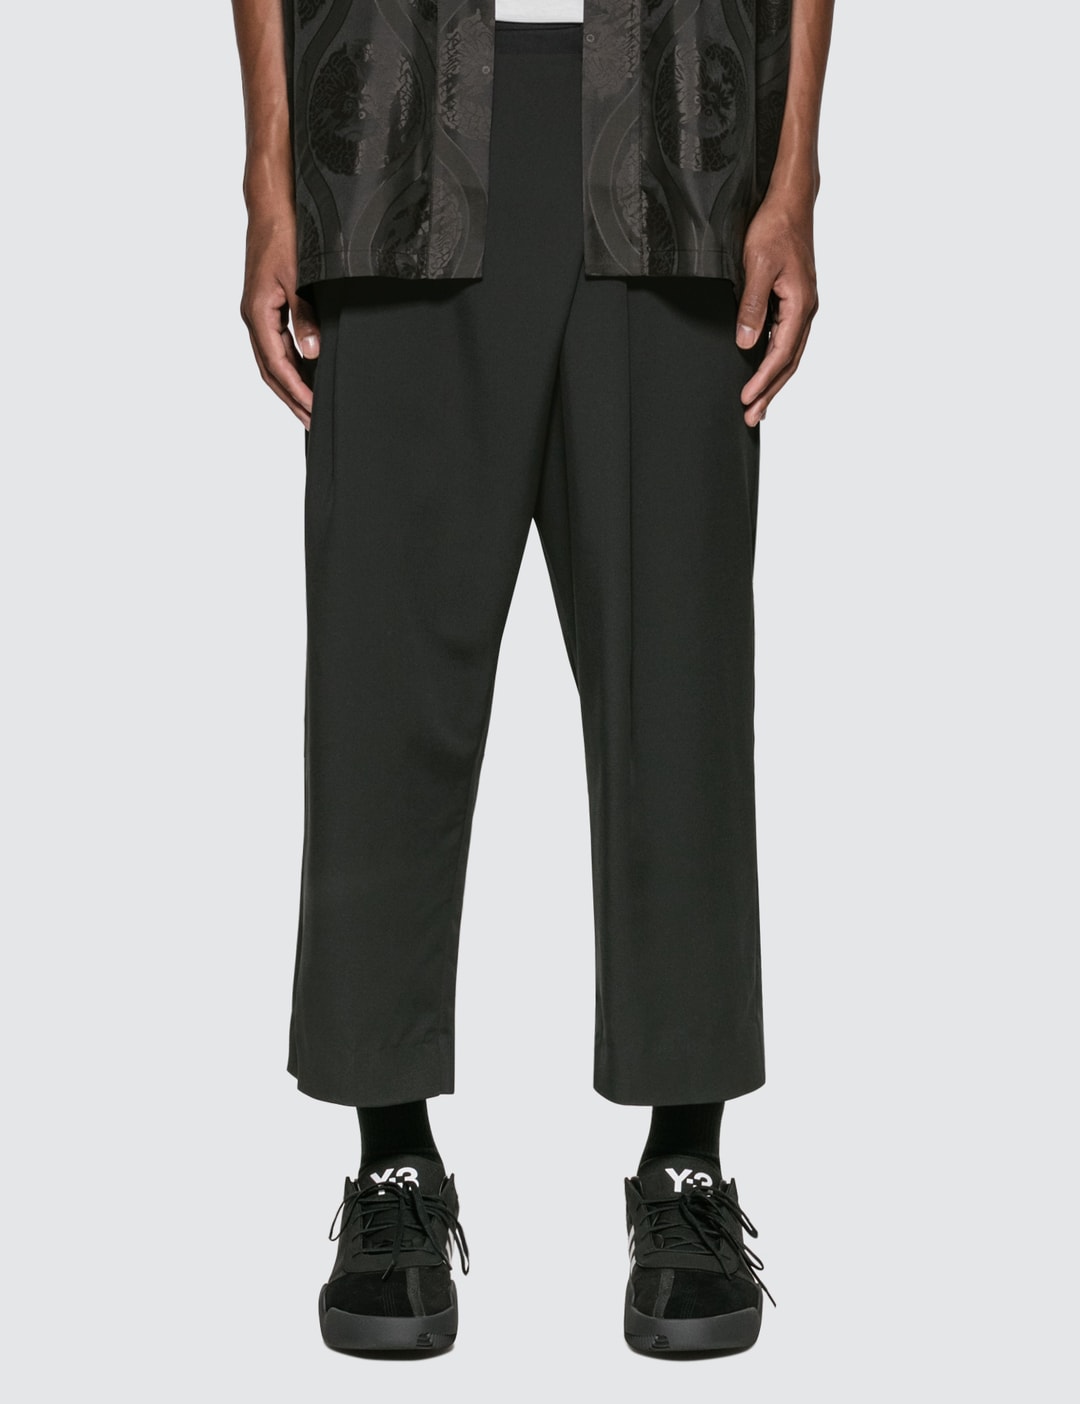 Sasquatchfabrix. - Asymmetric Pants | HBX - Globally Curated Fashion ...